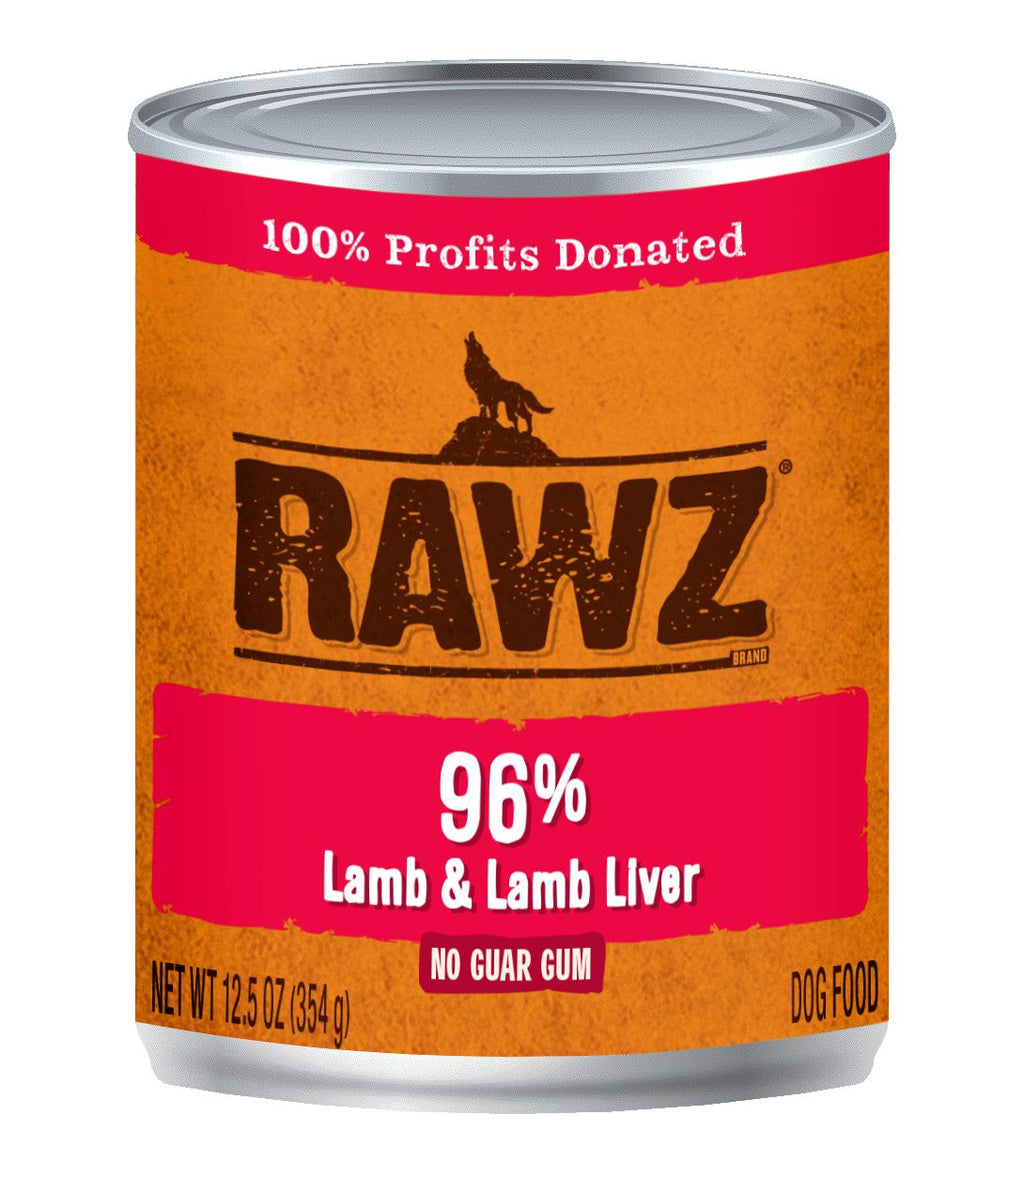 Rawz 96% Lamb & Lamb Liver Pate Canned Dog Food - 12.5 oz - Case of 12  